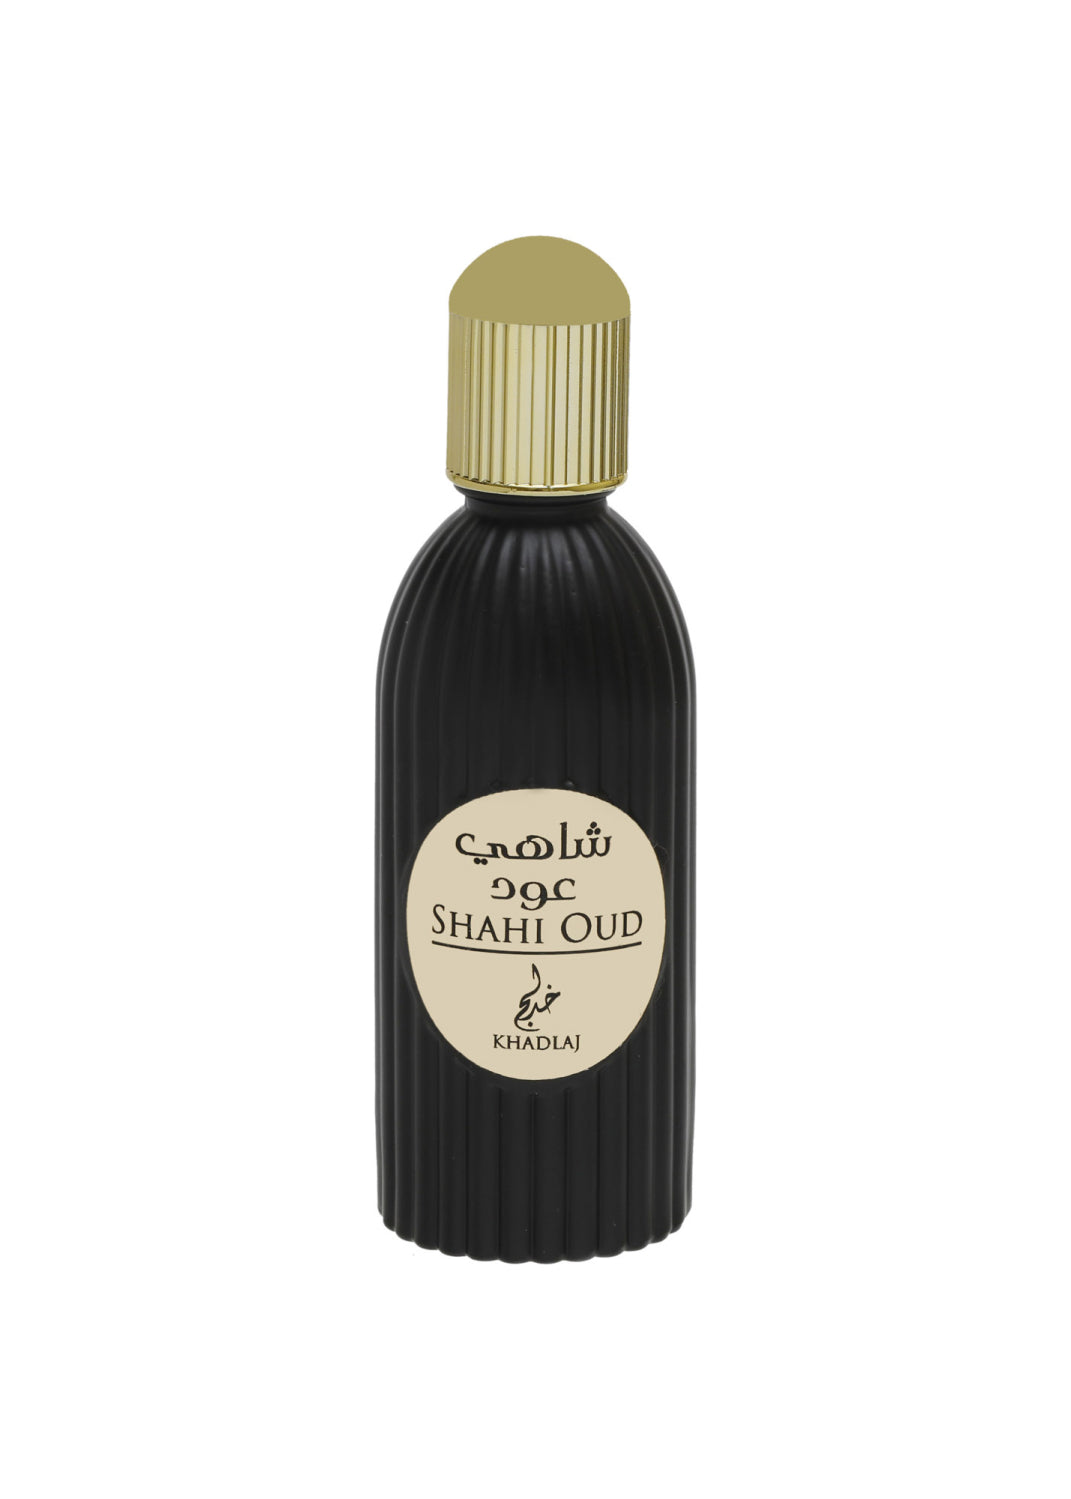 Shahi Oud Eau de Parfum for Men Spray - 100ml by Khadlaj Perfumes